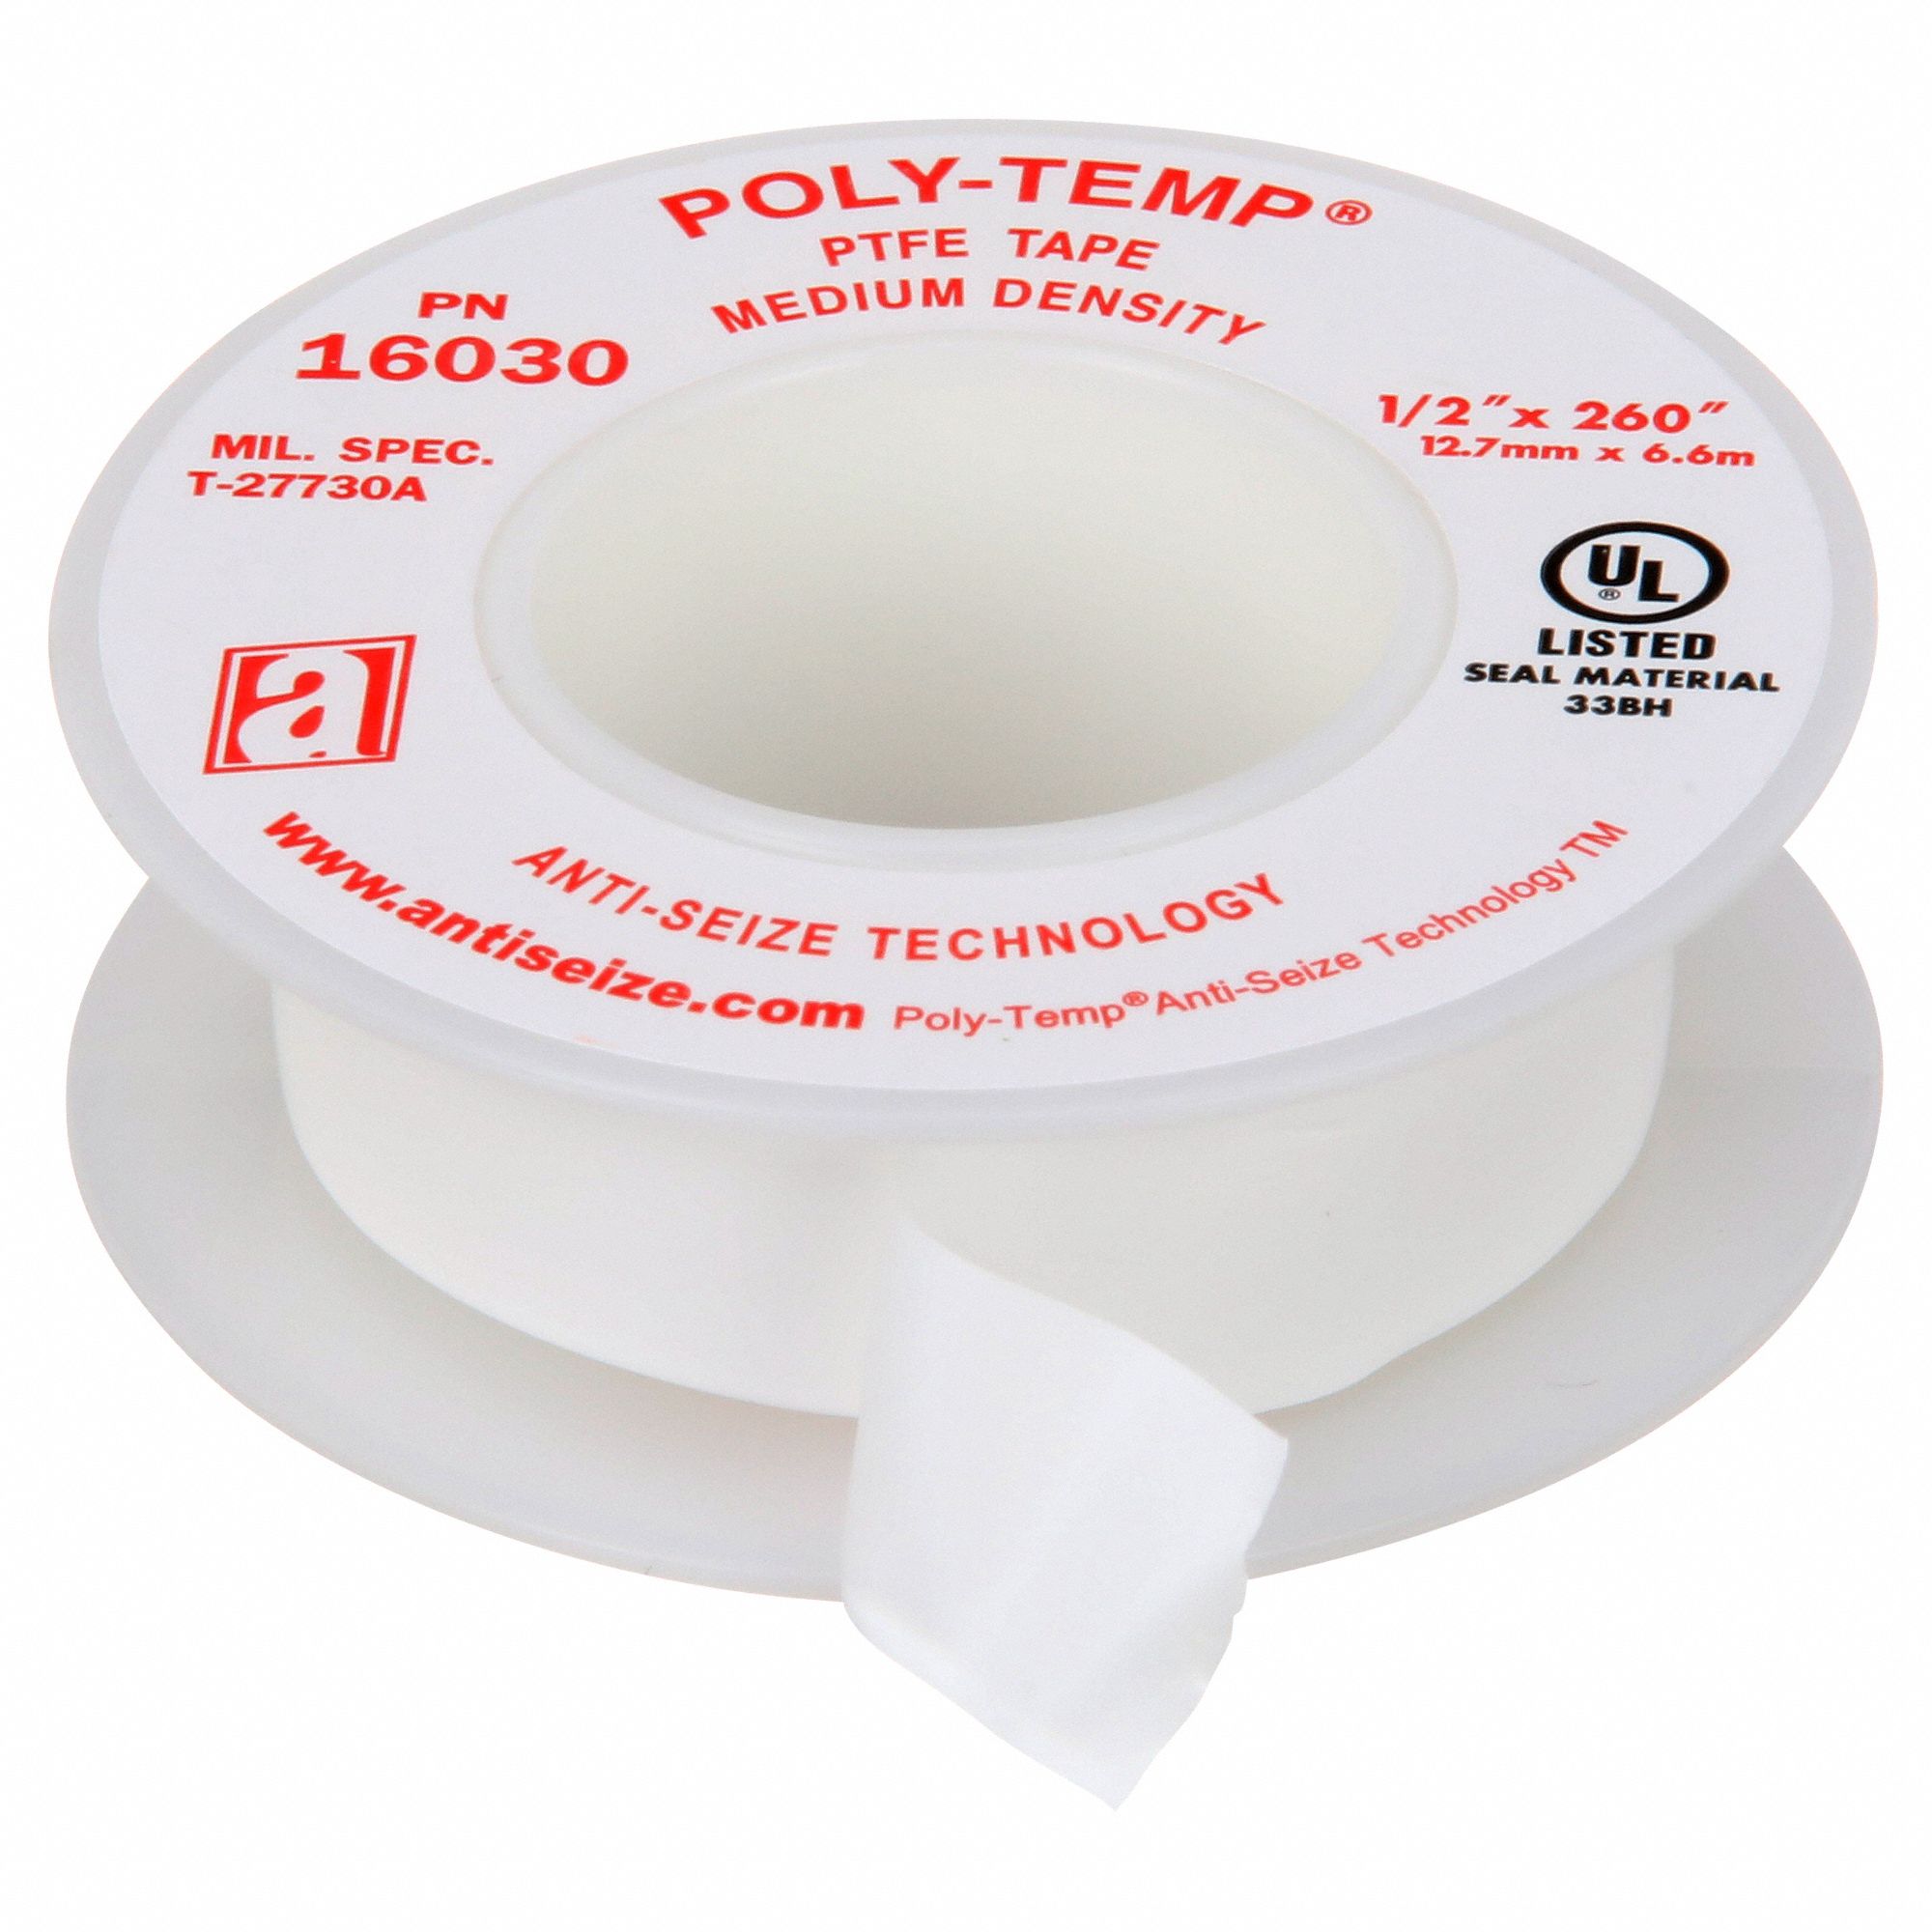 Popular exporting 3M 28CT sealing weatherproof clay / 3M 28CT waterproof  insulation tape /3M 28CT sealing wate